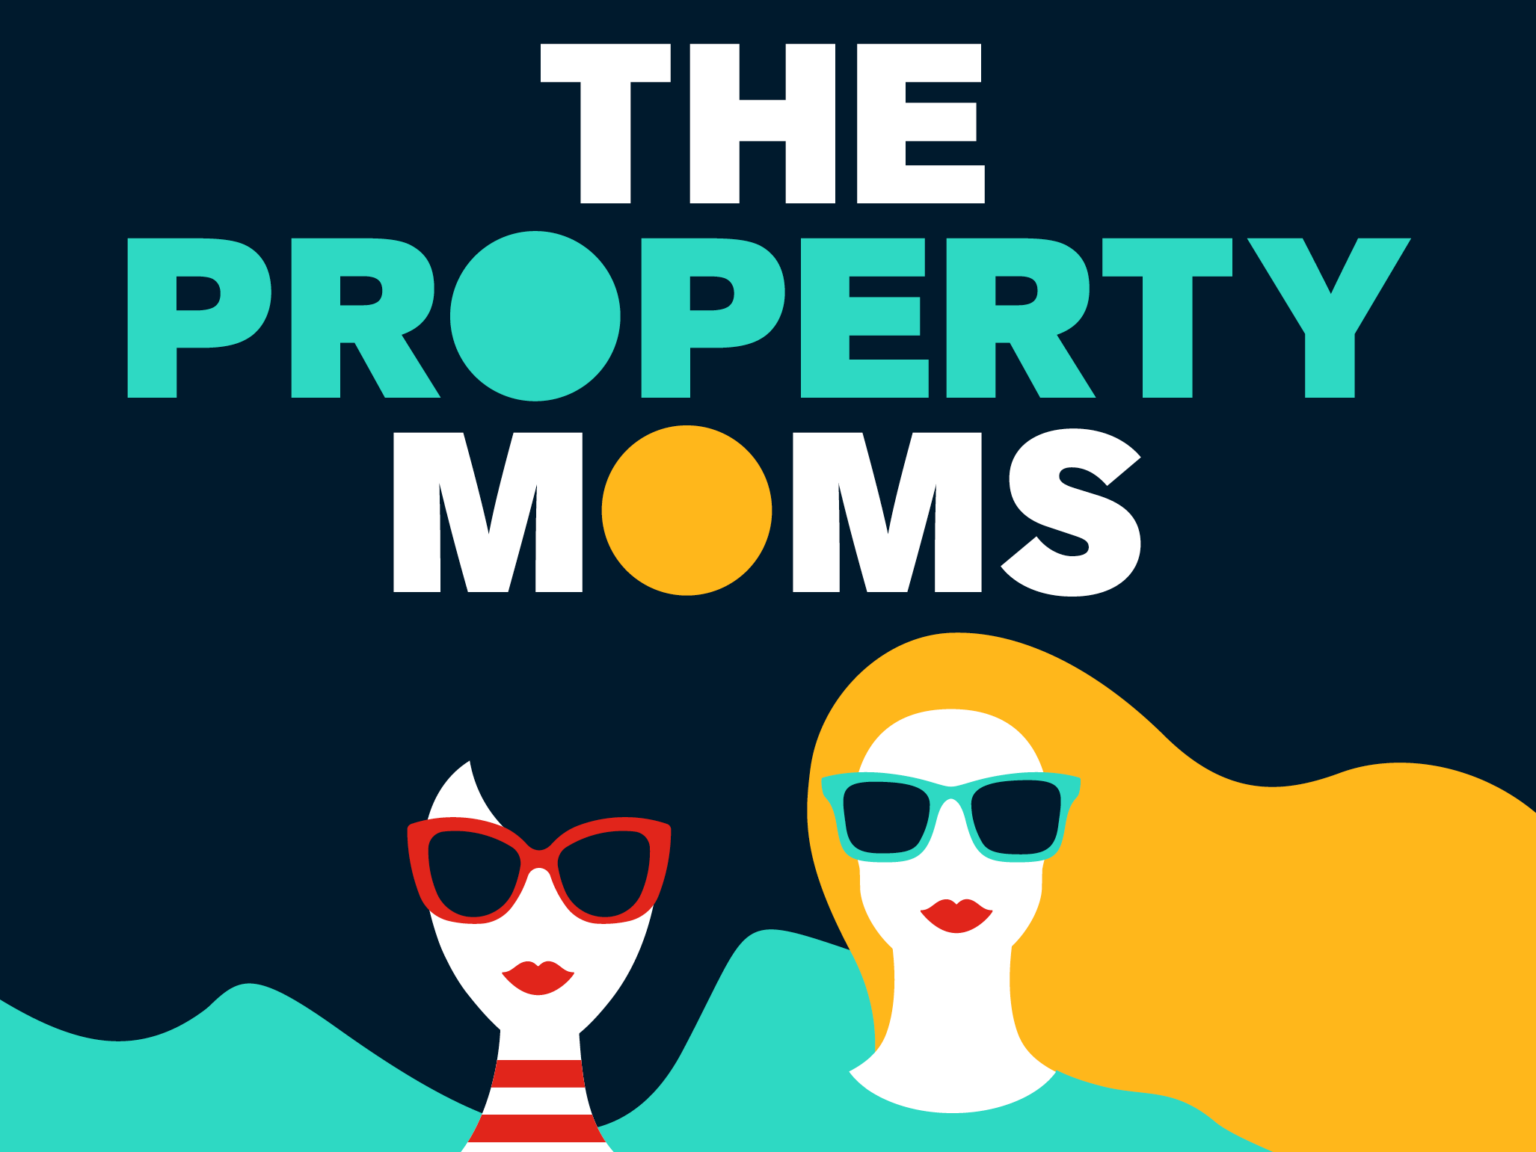 the property moms logo edit03 cmyk (1) (1)